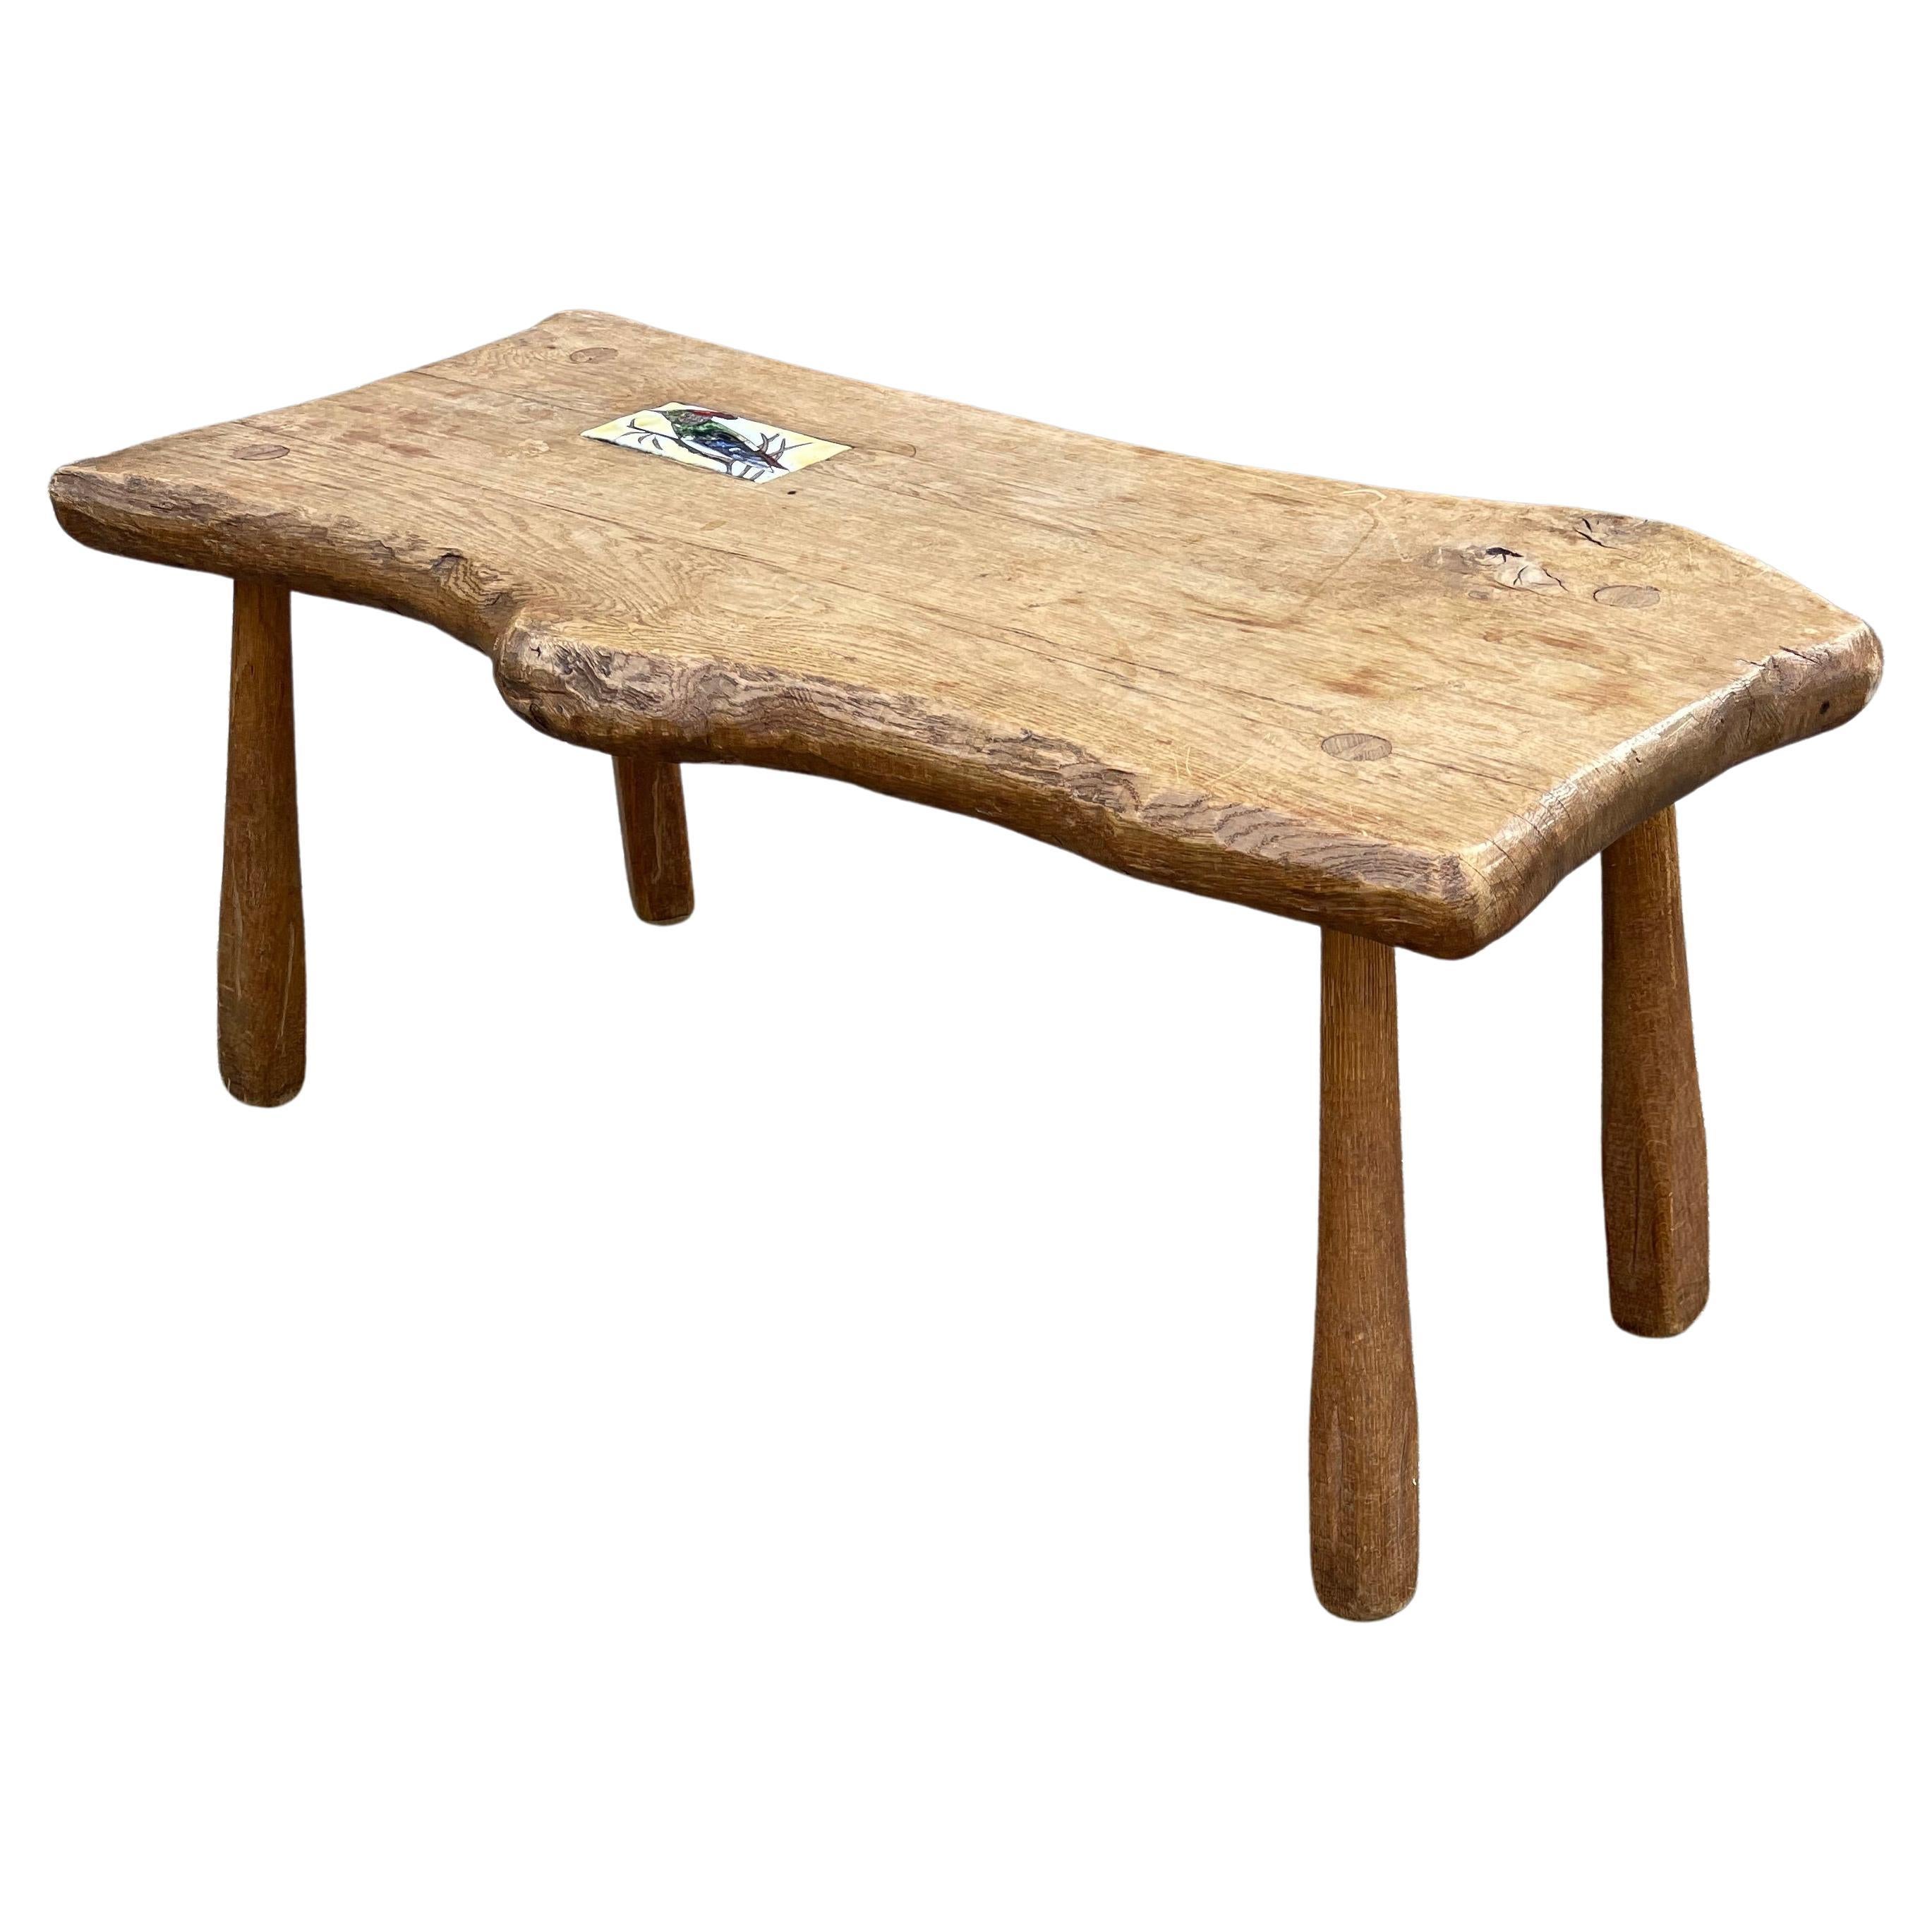 Midcentury, 1950s Rustic Handmade Oak Wooden Coffee Table with Woodpecker Tile